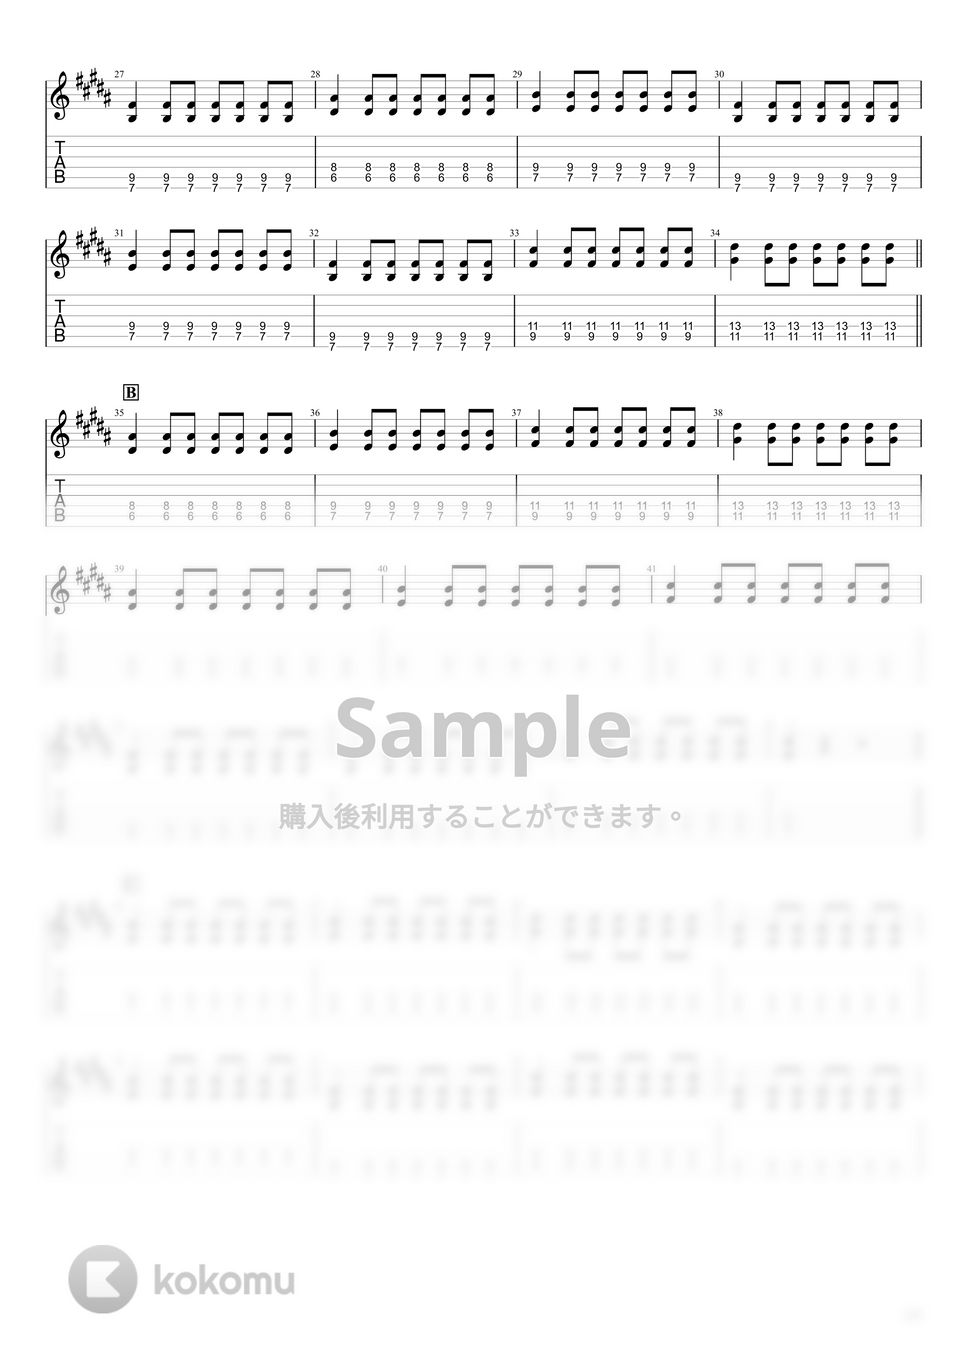 MONGOL800 - 小さな恋のうた (ギター) by うつみ